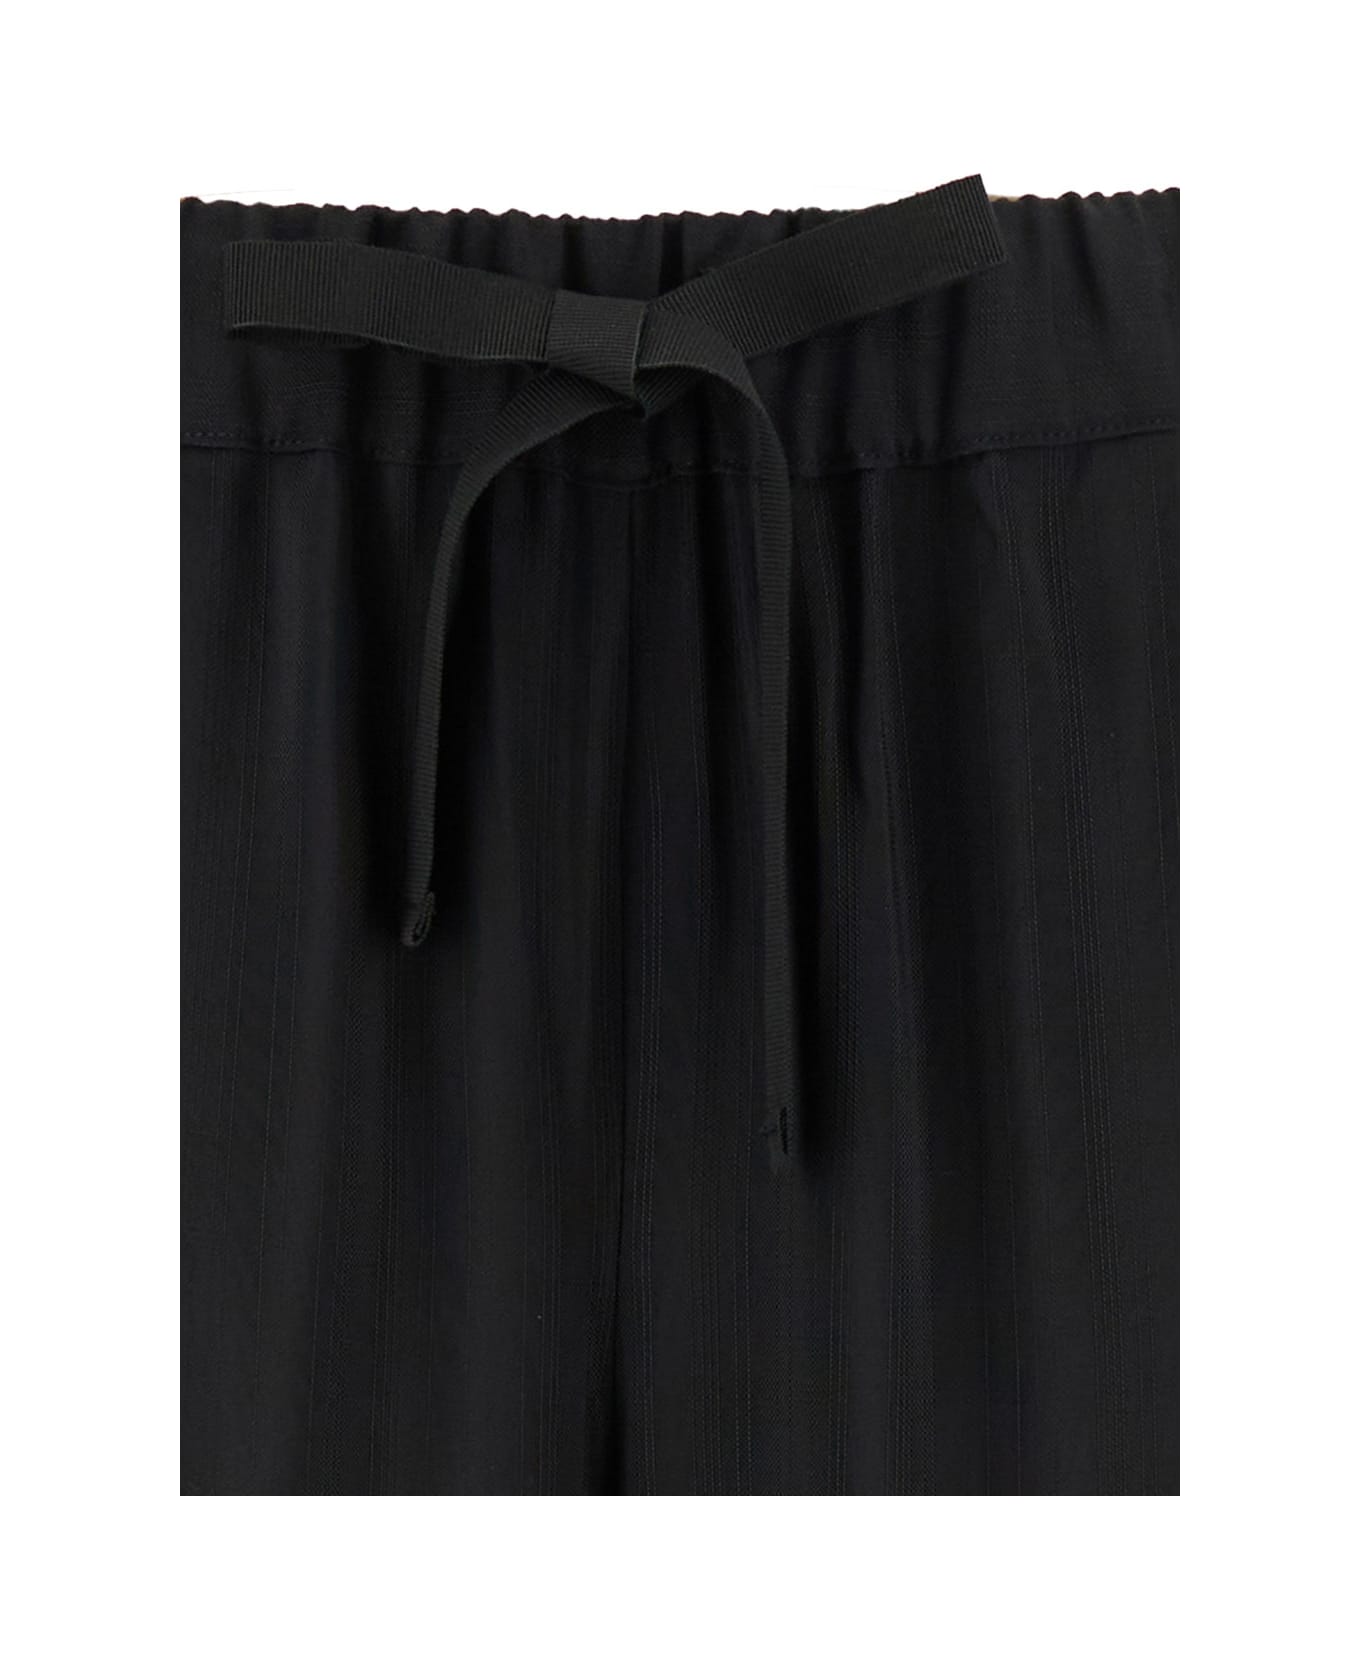 SEMICOUTURE Black Pants With Drawstring Closure In Viscose Woman - Black ボトムス